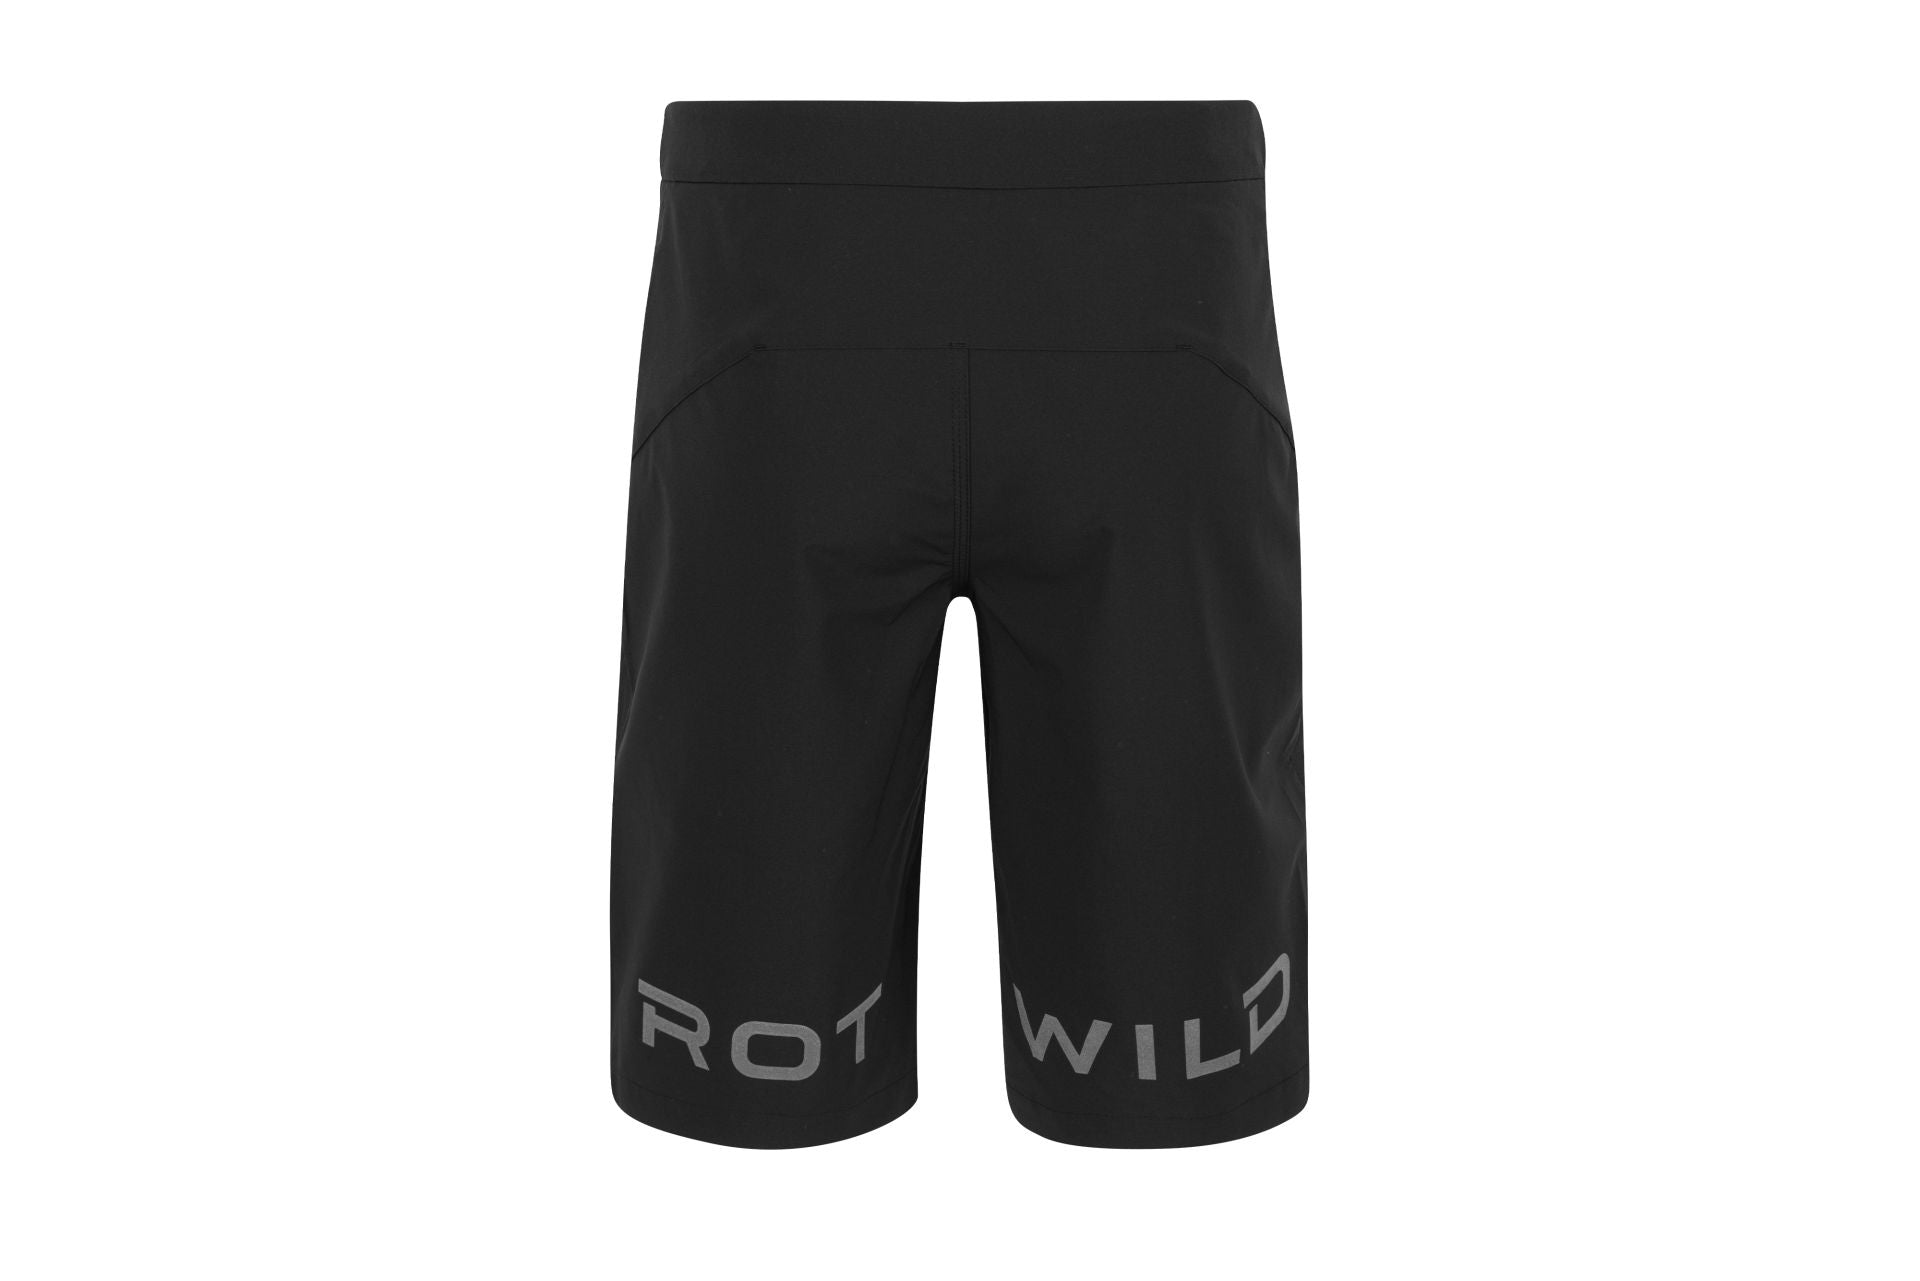 Rotwild-active-shorts-men-gallasm-rotwild black